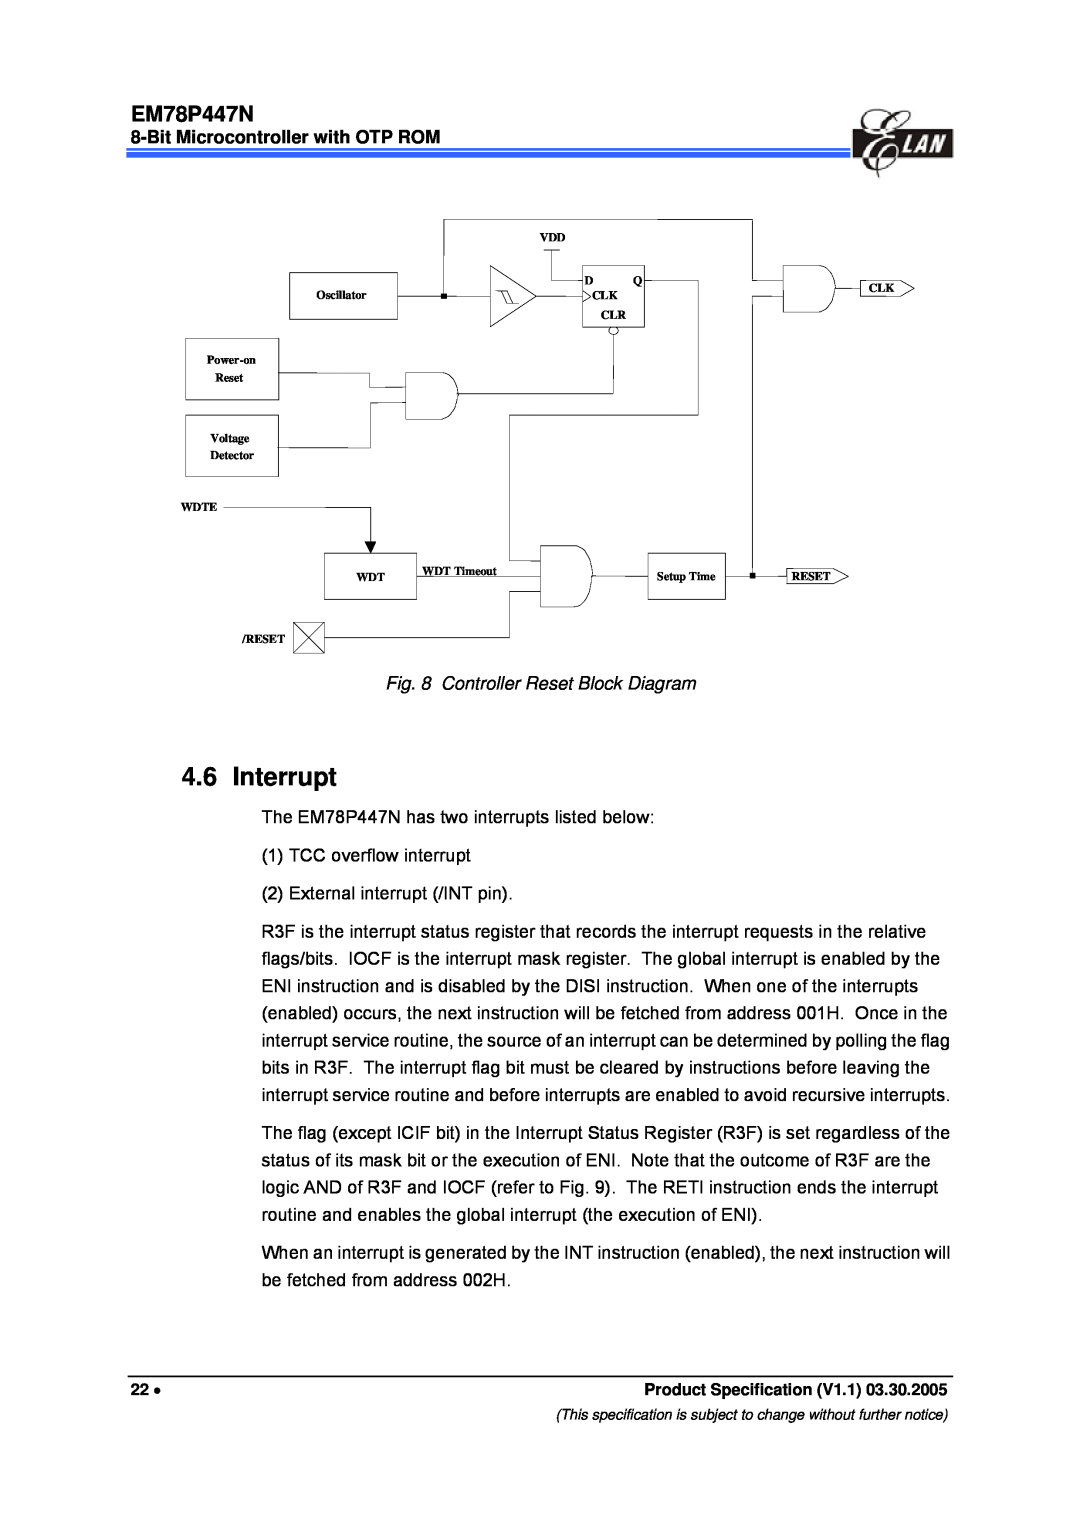 IBM EM78P447N manual Interrupt, Controller Reset Block Diagram 